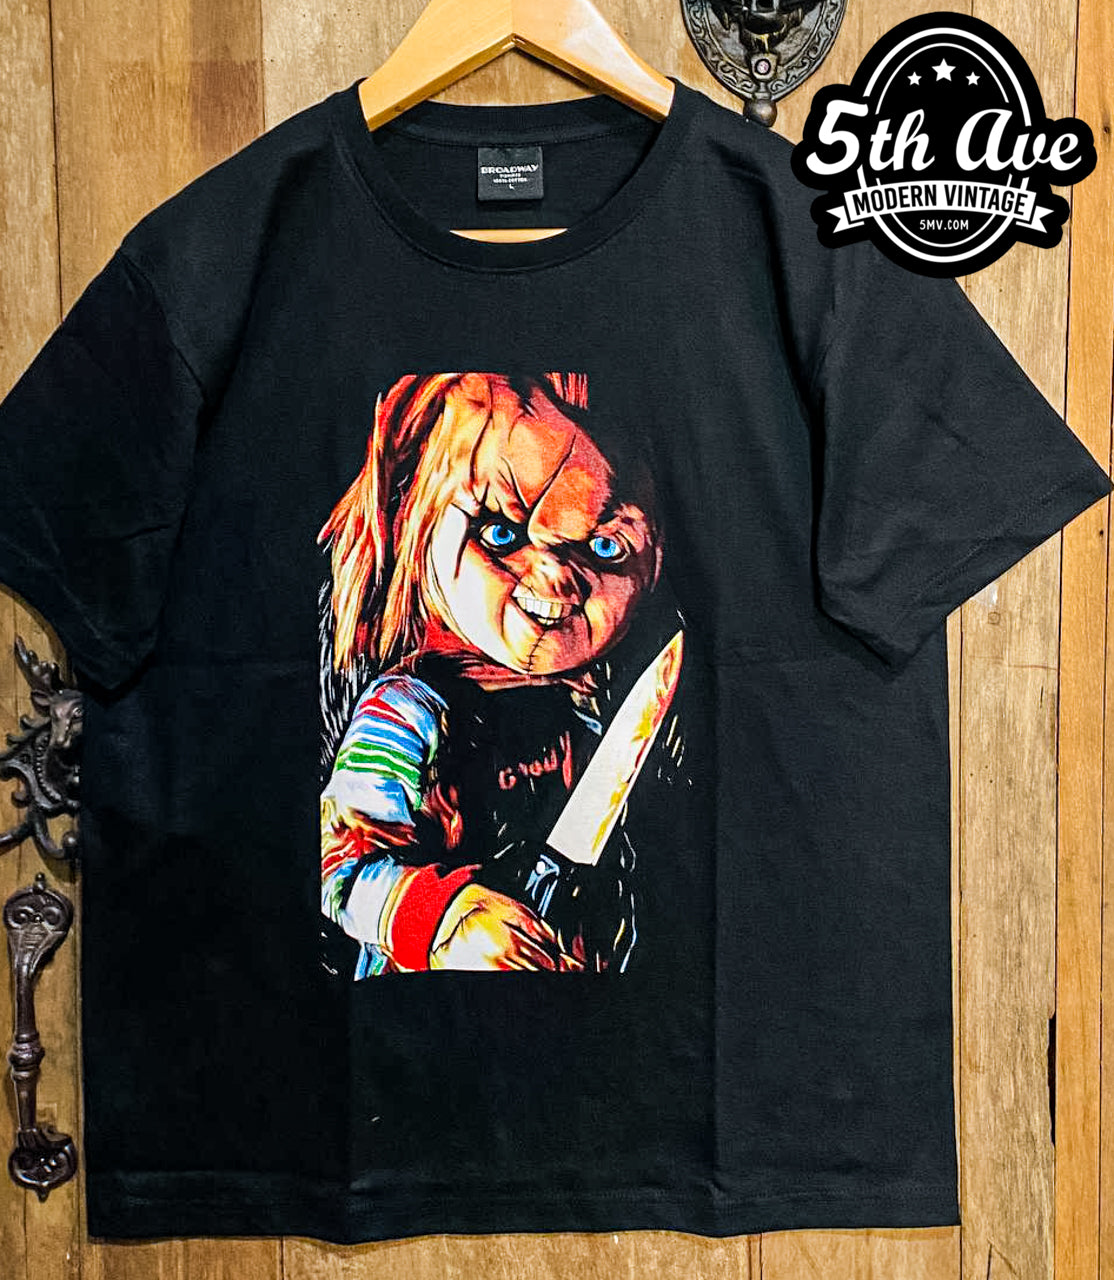 Chucky's Menace T-Shirt: Unleash the Horror"